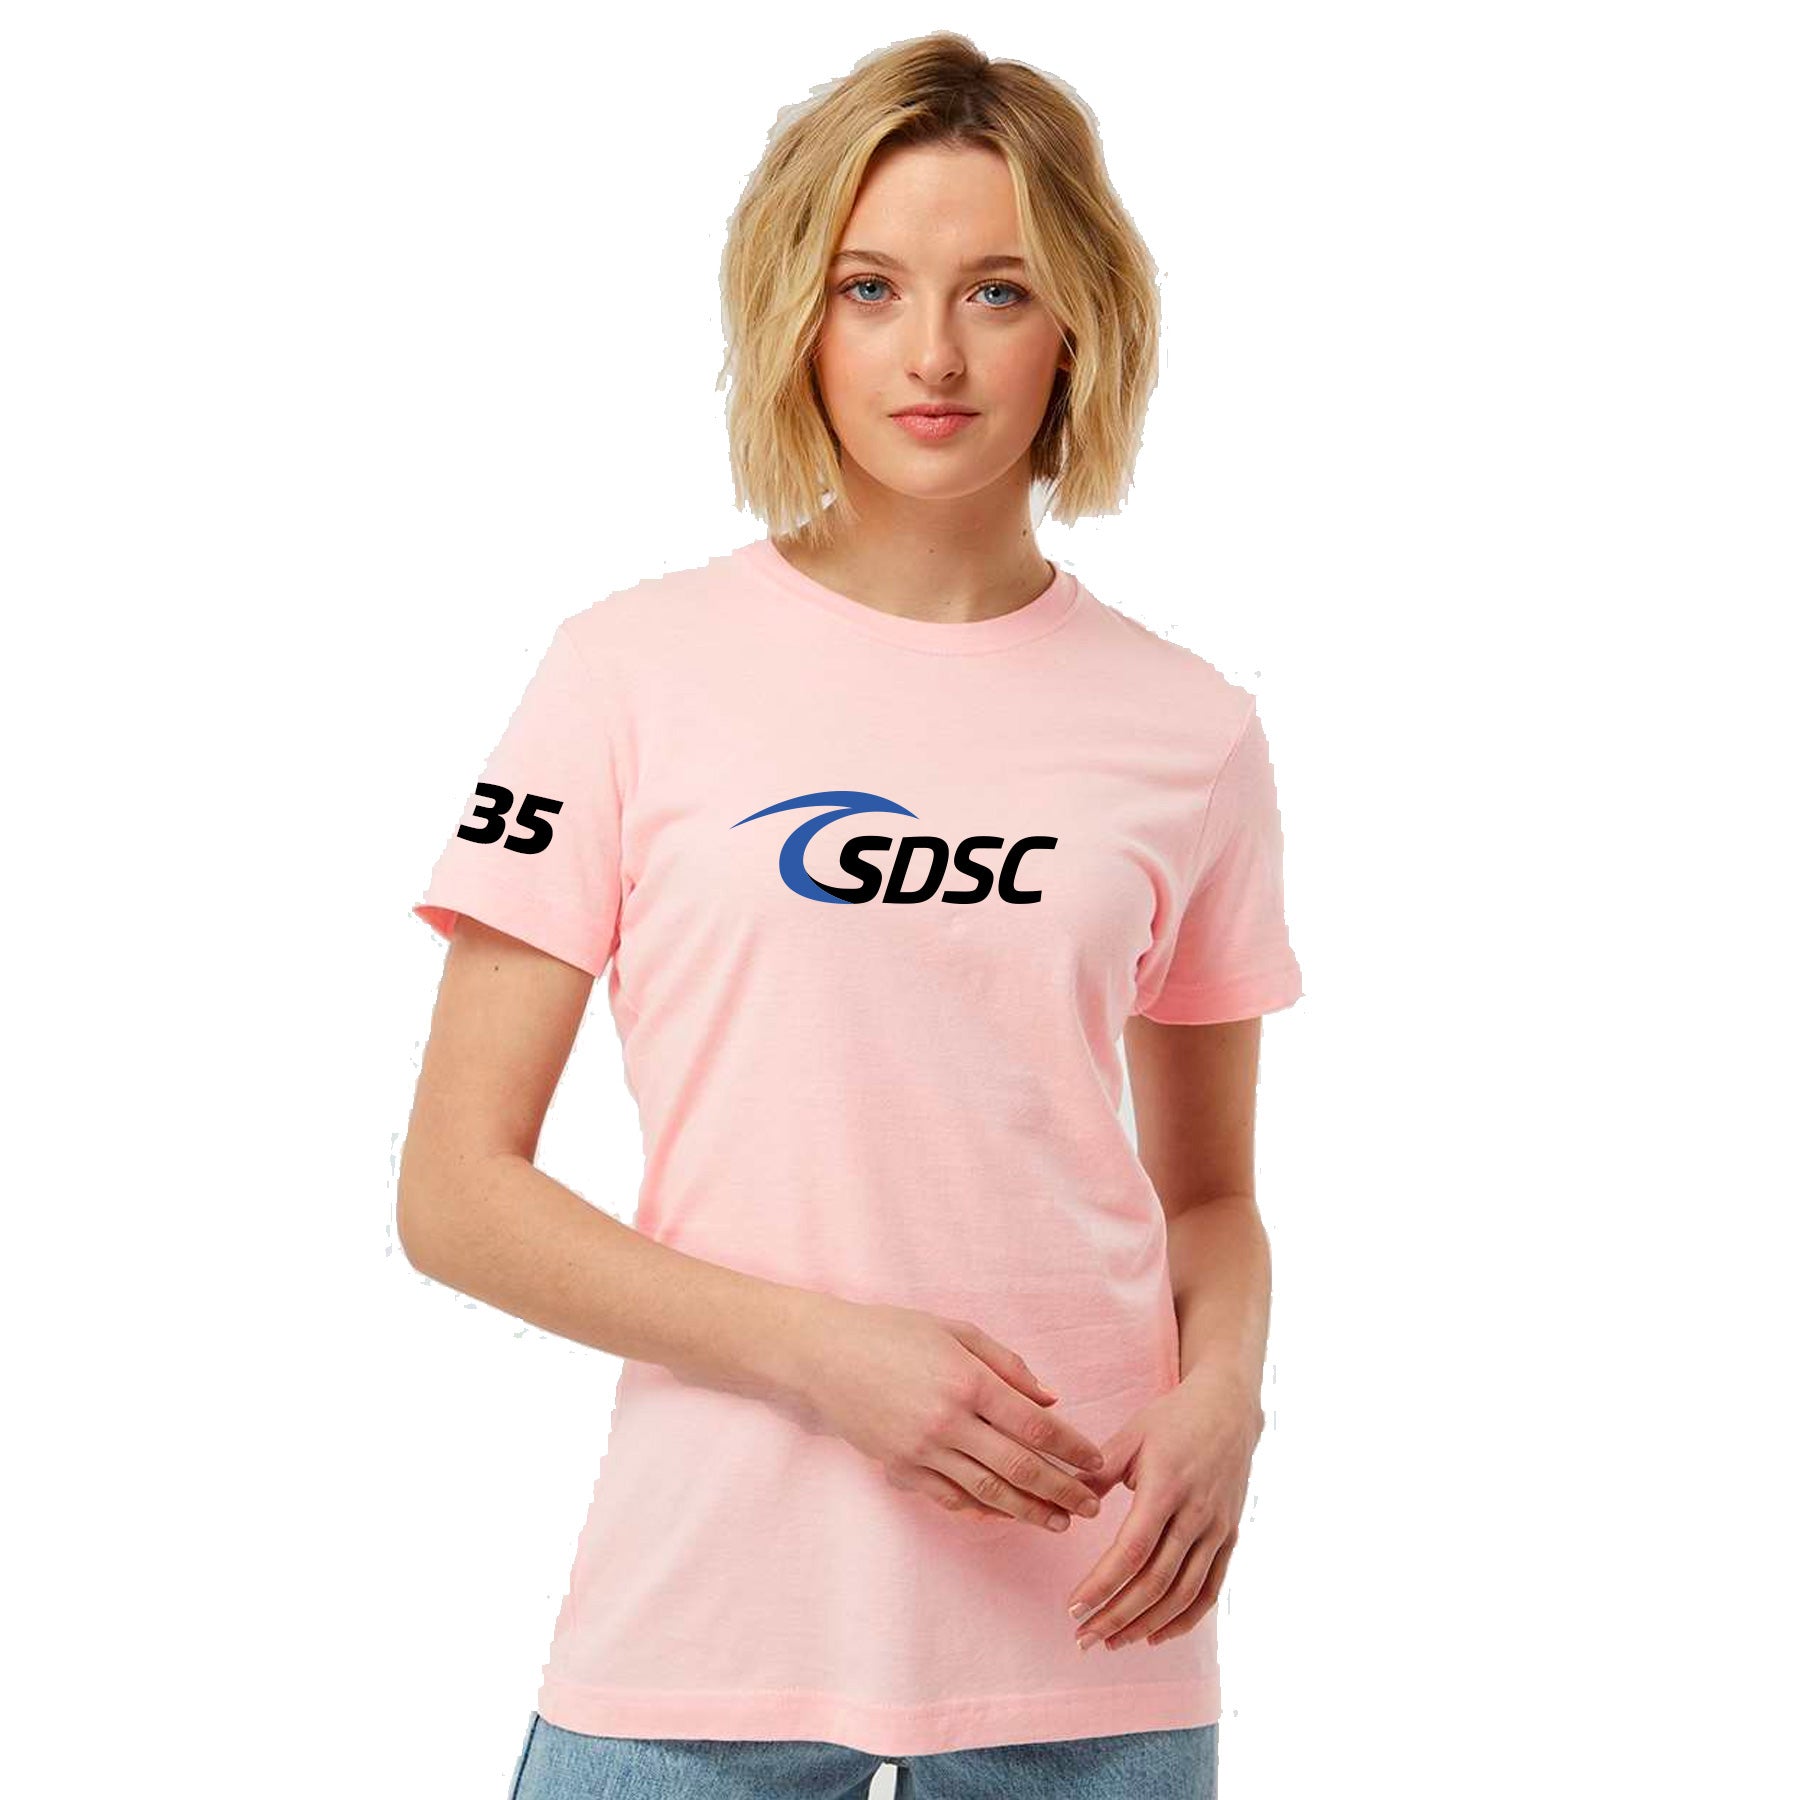 SDSC LOGO CLASSIC T-SHIRT